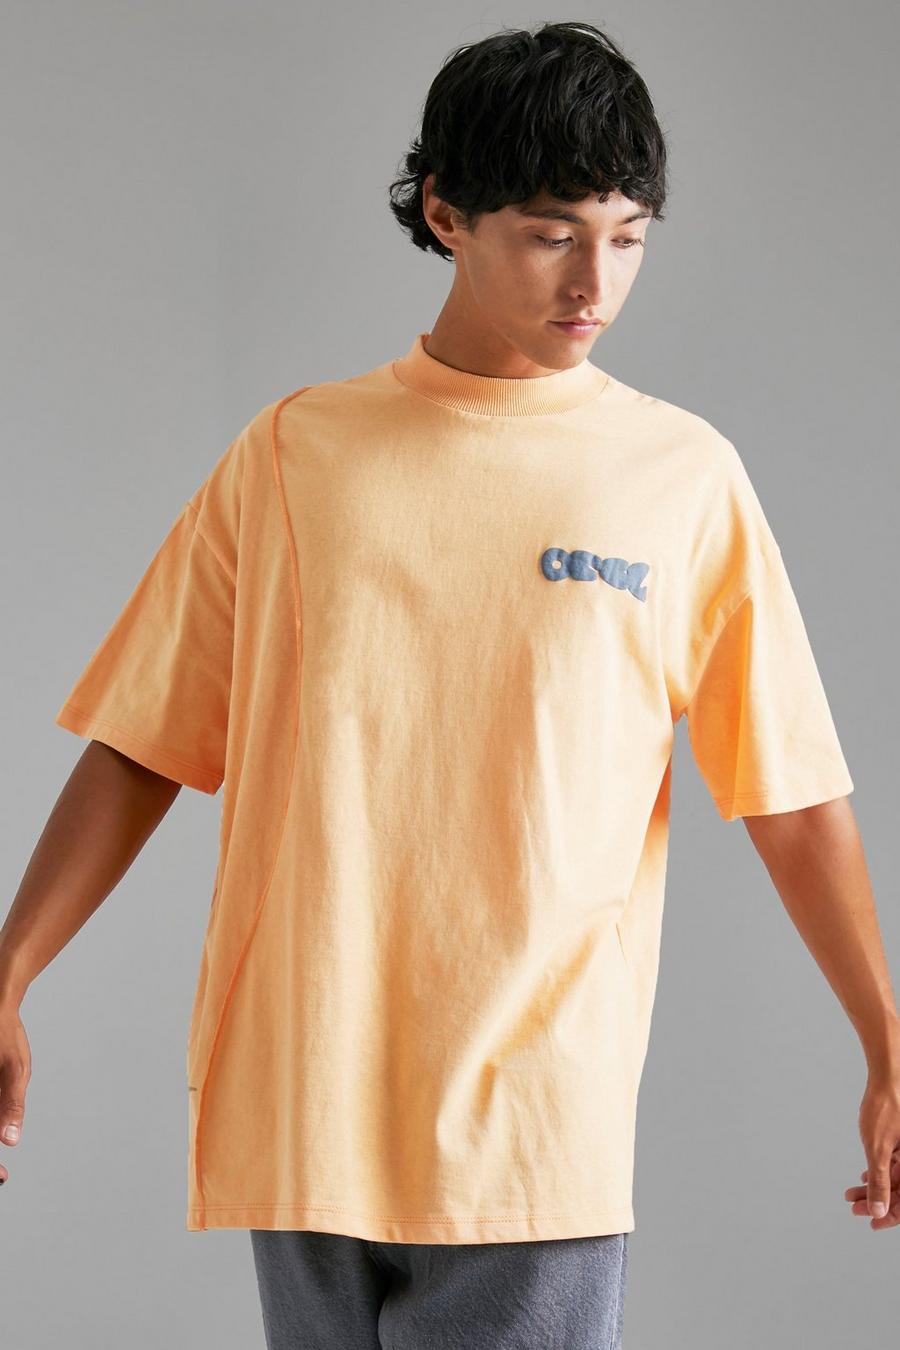 Official Official T-Shirt, Peach orange